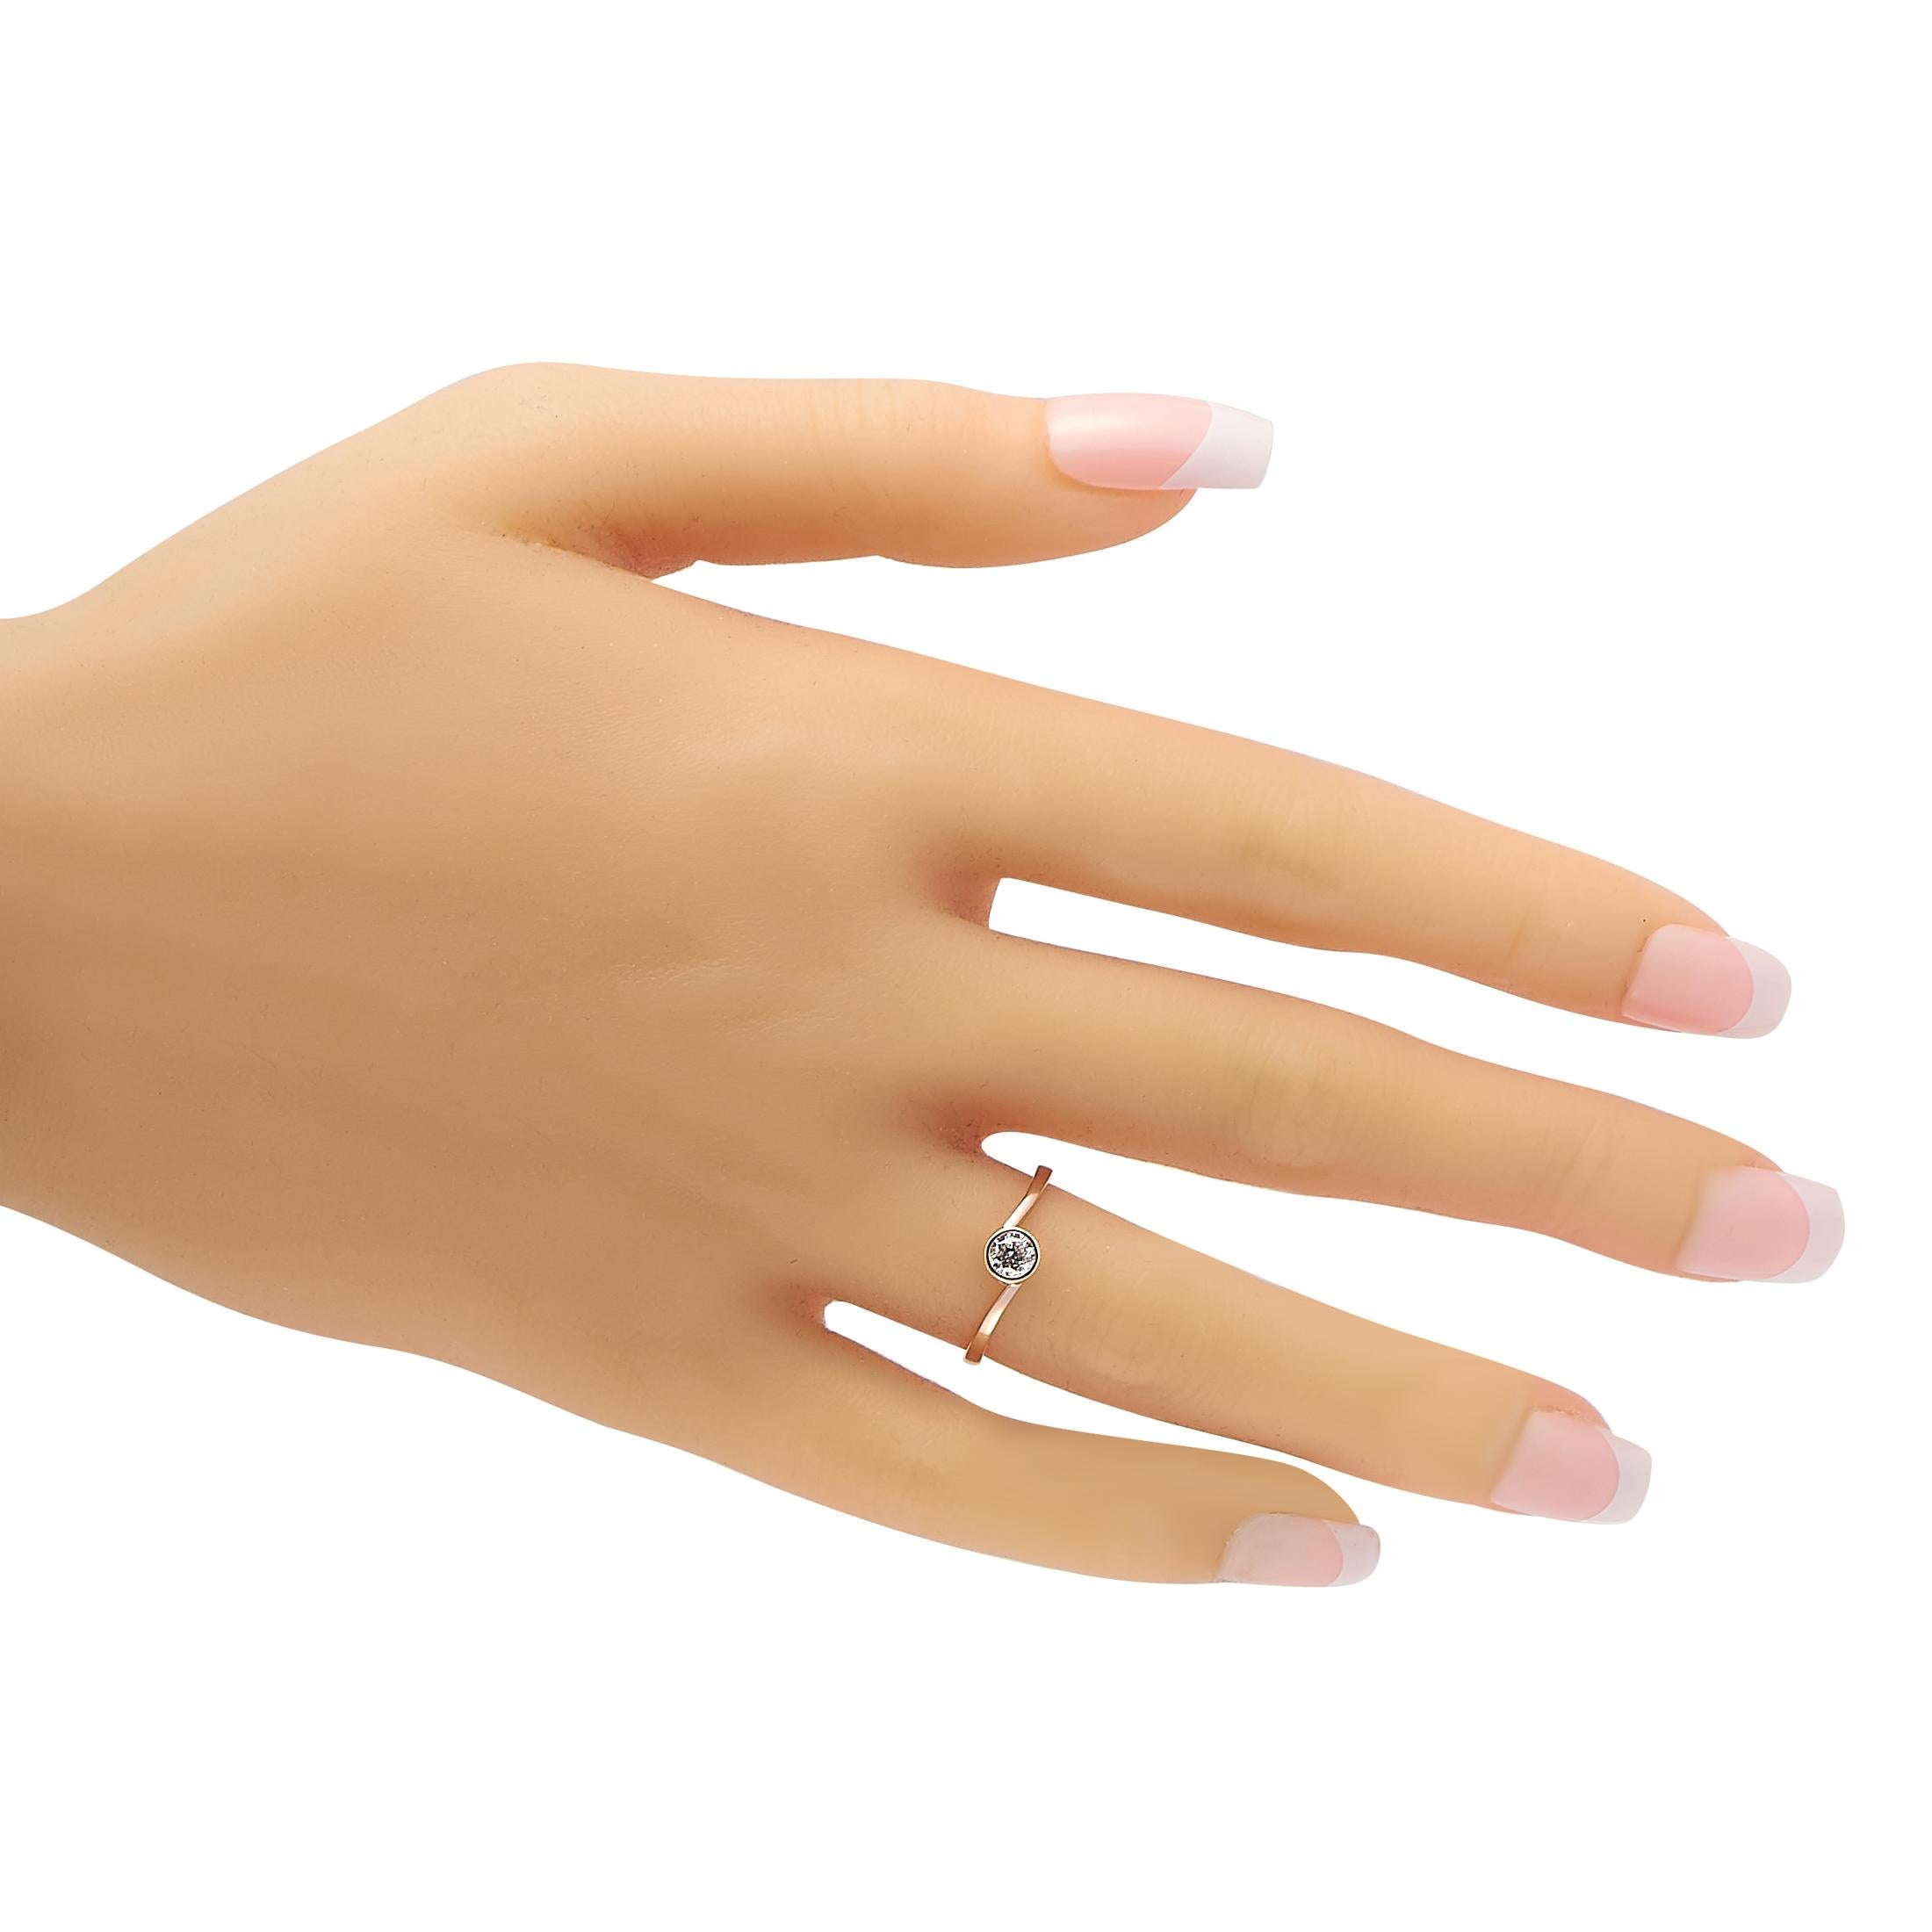 0.26 carat diamond ring